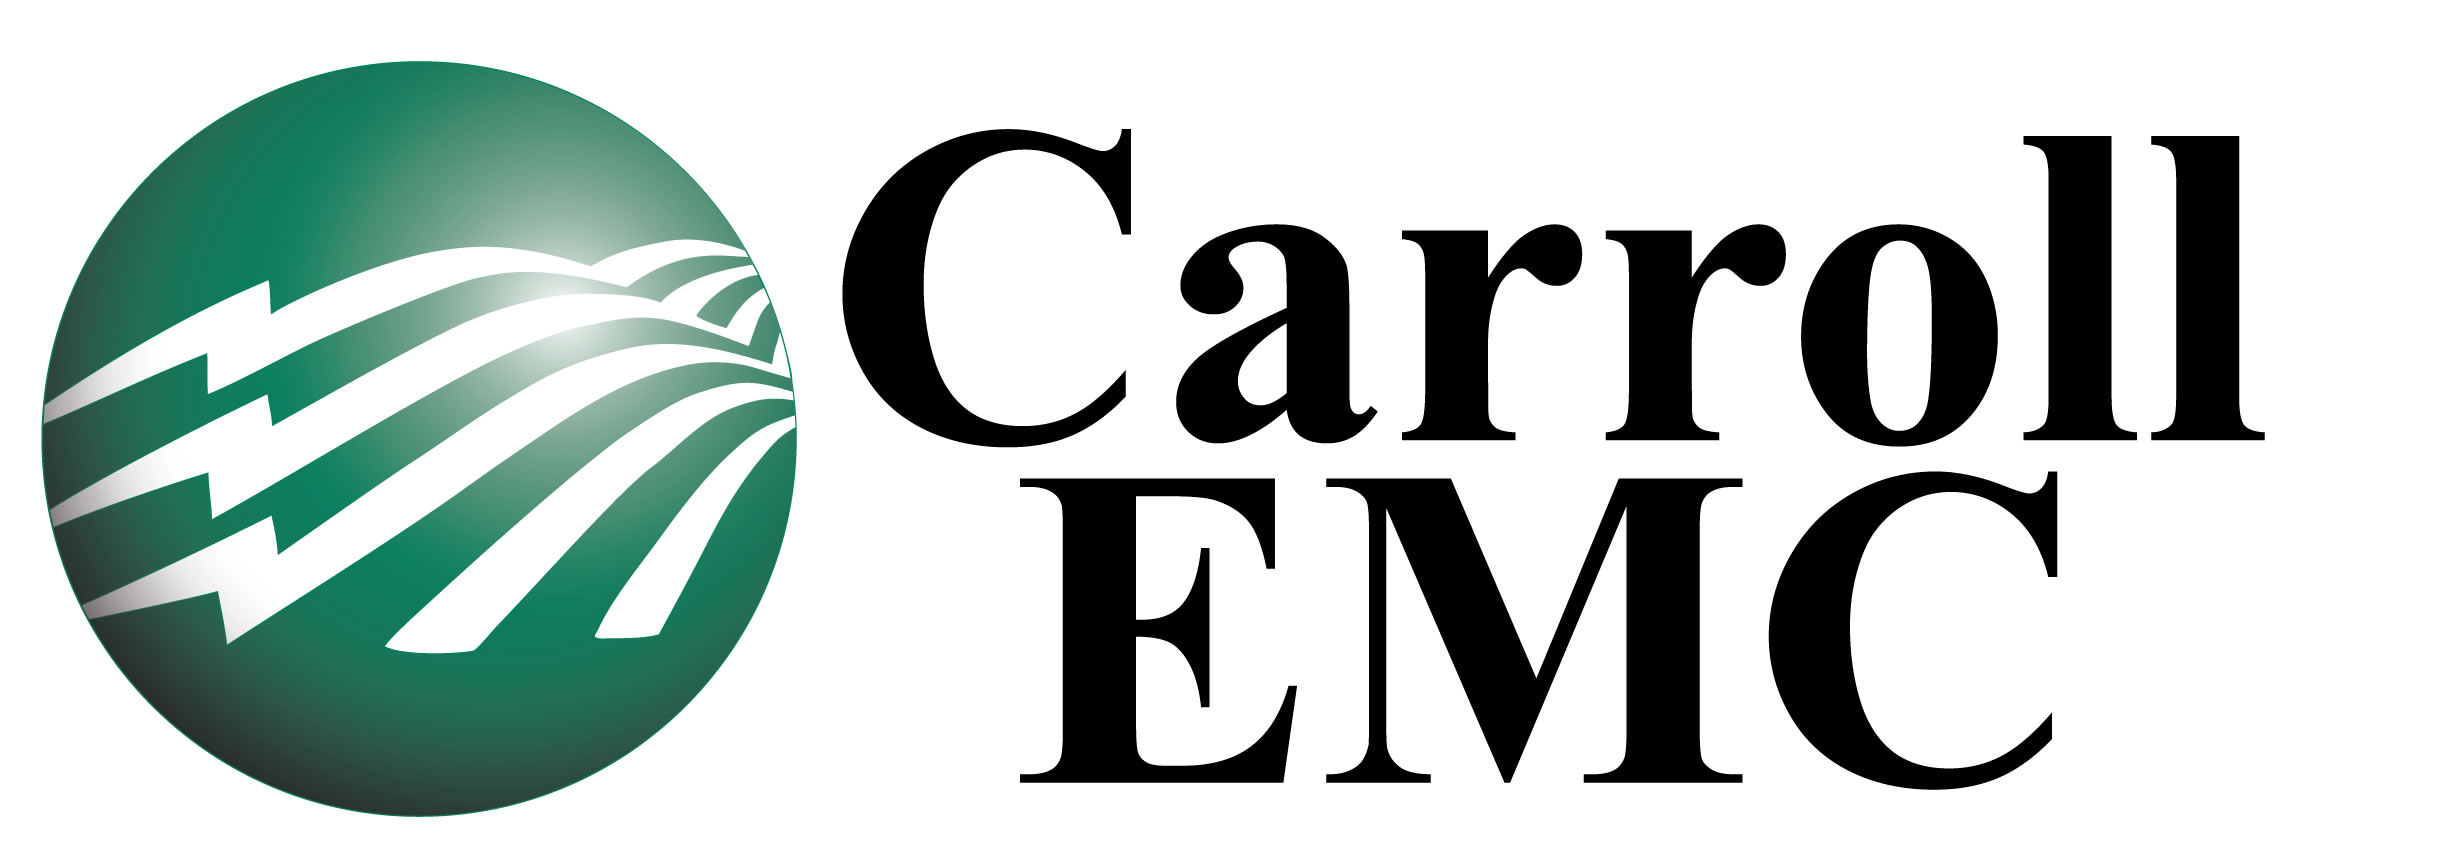 Carroll Electric Membership Cooperative Profile